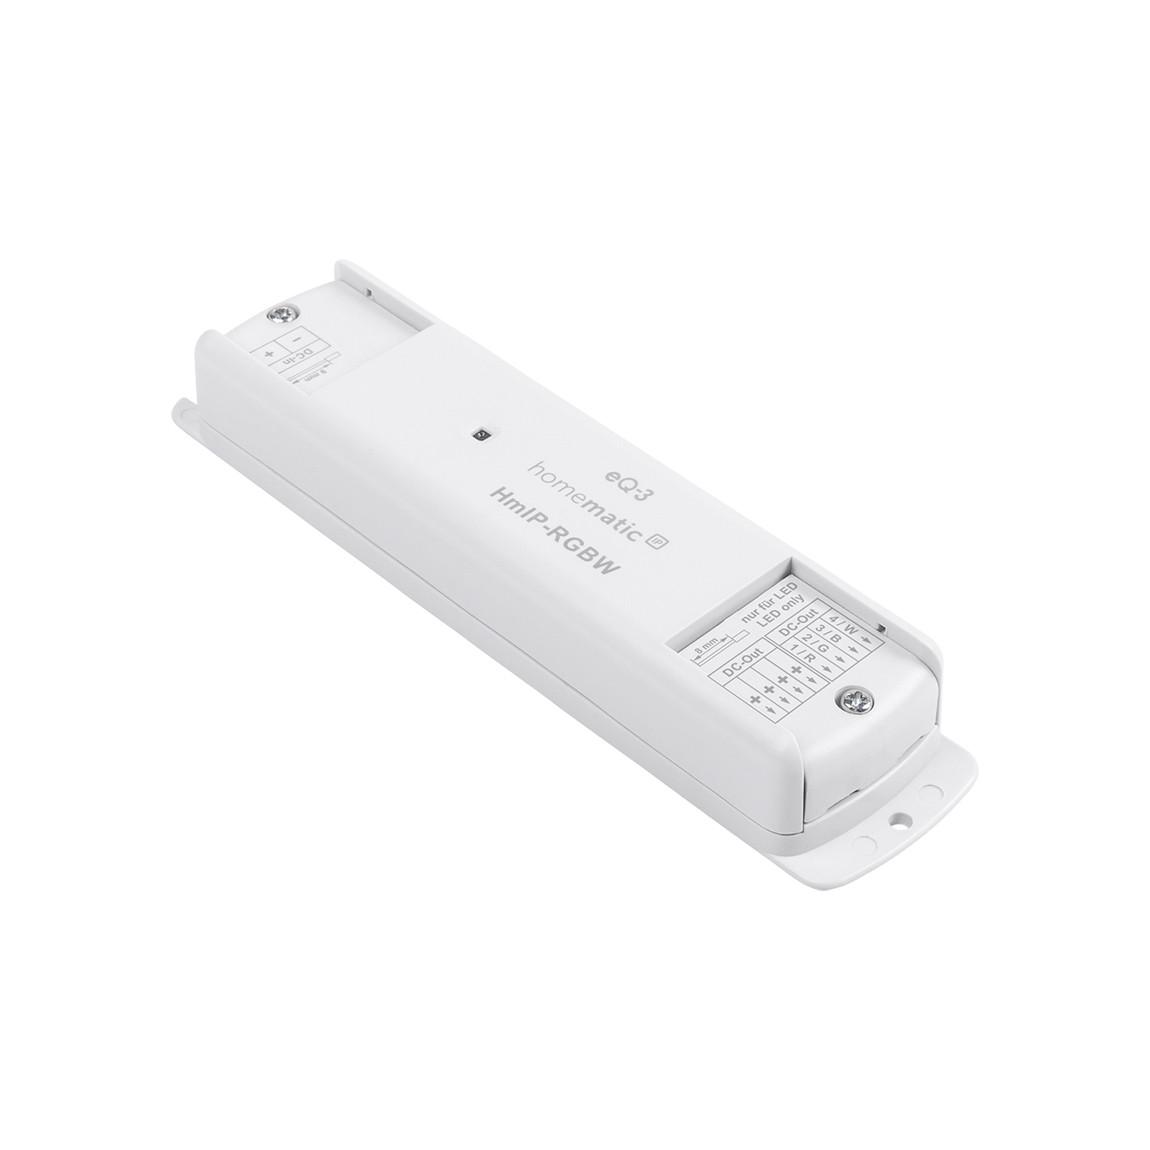 Homematic IP RGB Controller - Weiß